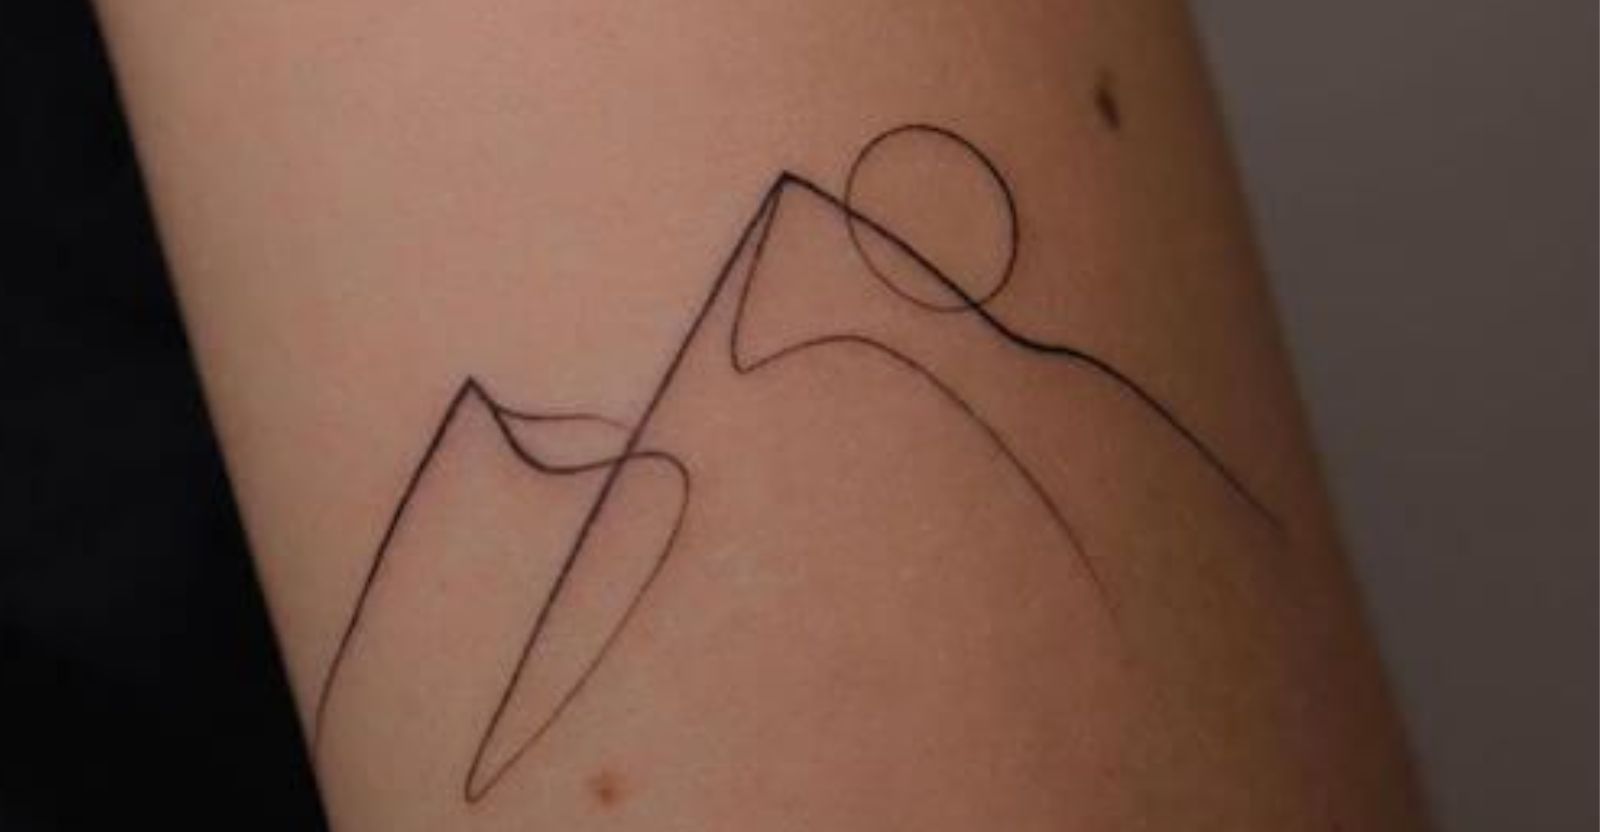 Minimalist mountain tattoo on lower back